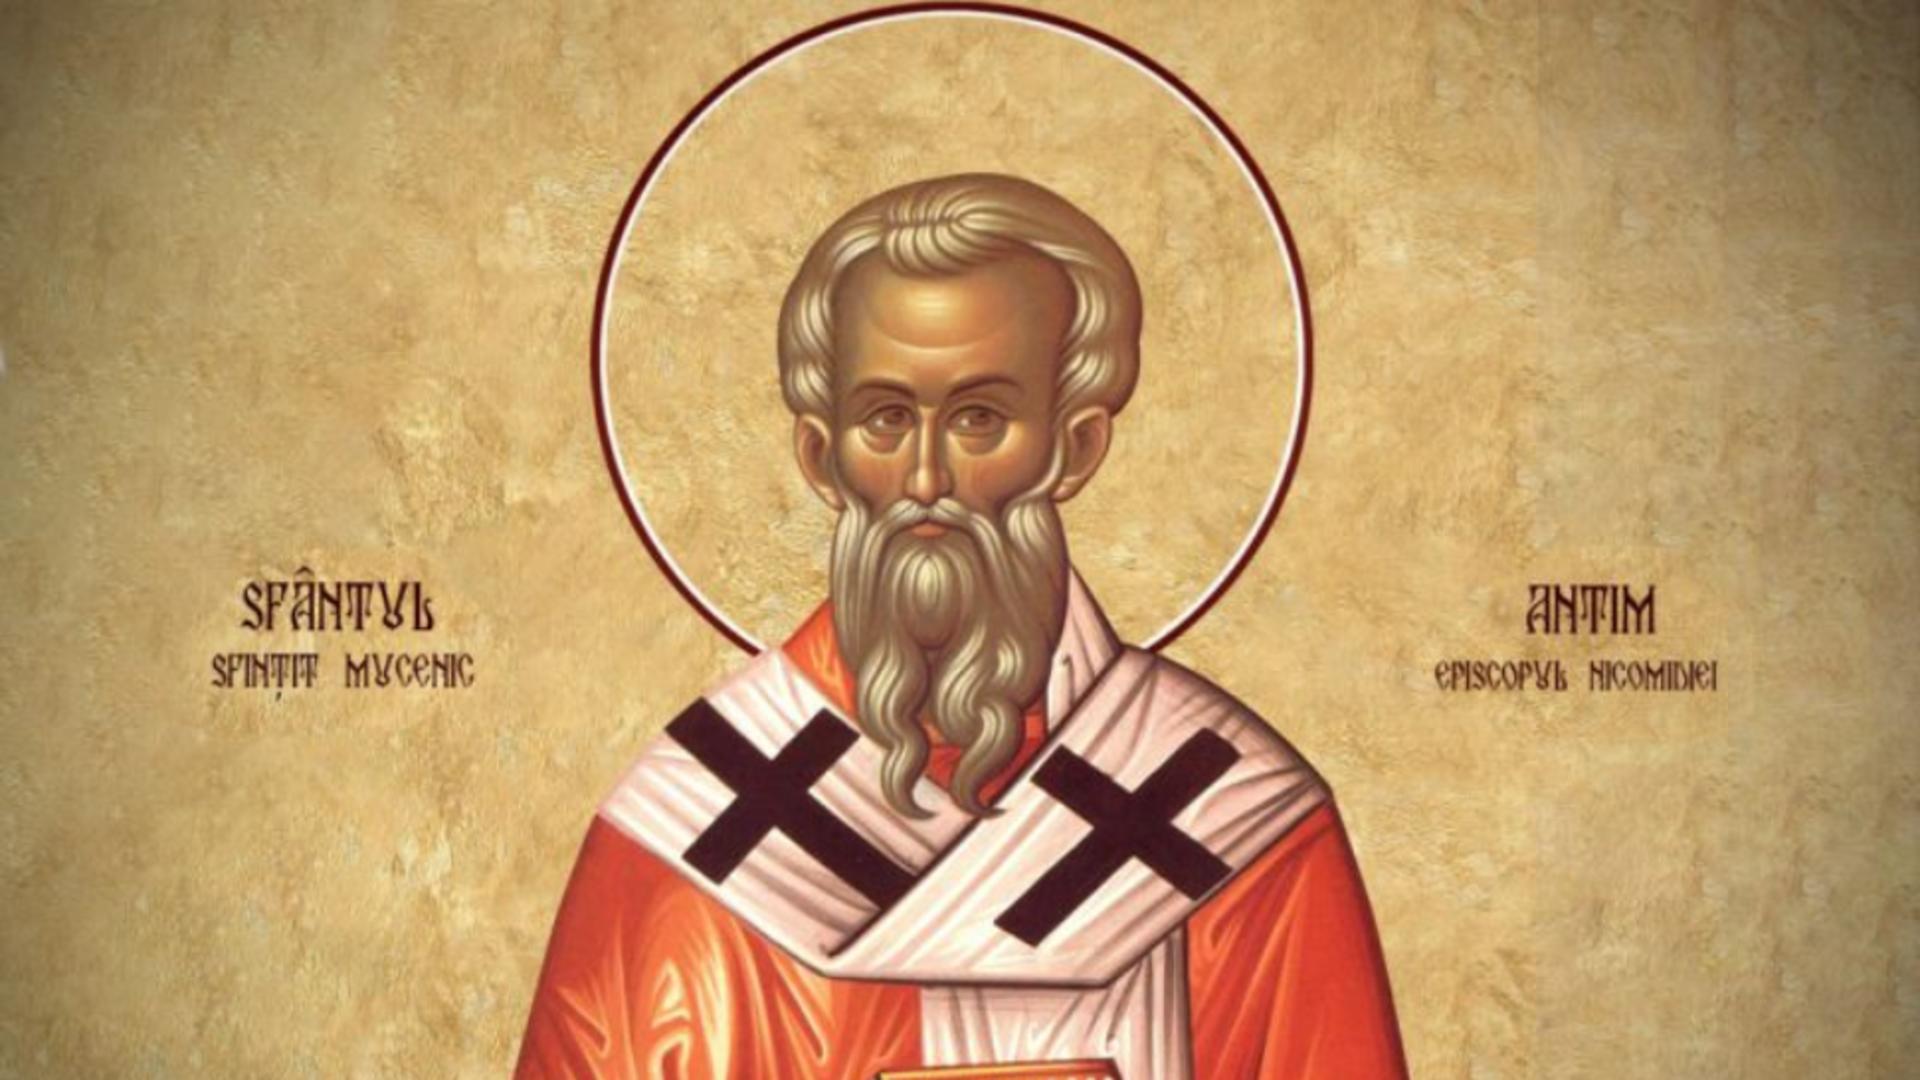 Sf. Sfinţit Mc. Antim, episcopul Nicomidiei